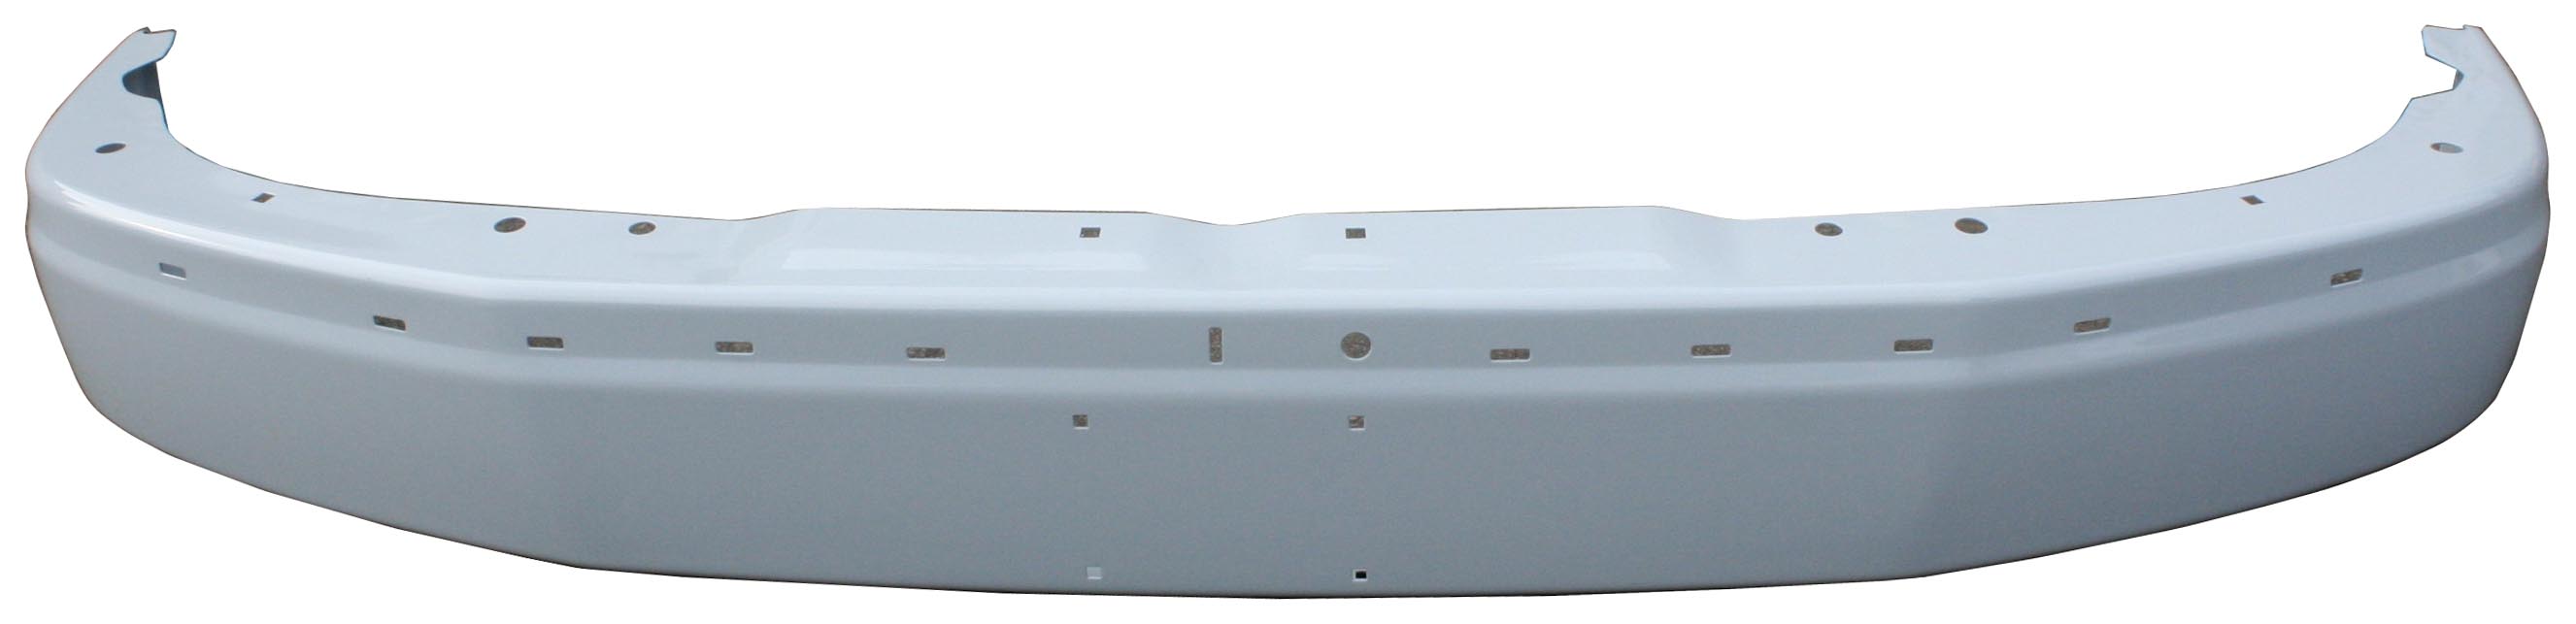 Aftermarket METAL FRONT BUMPERS for GMC - SAVANA 1500, SAVANA 1500,03-14,Front bumper face bar